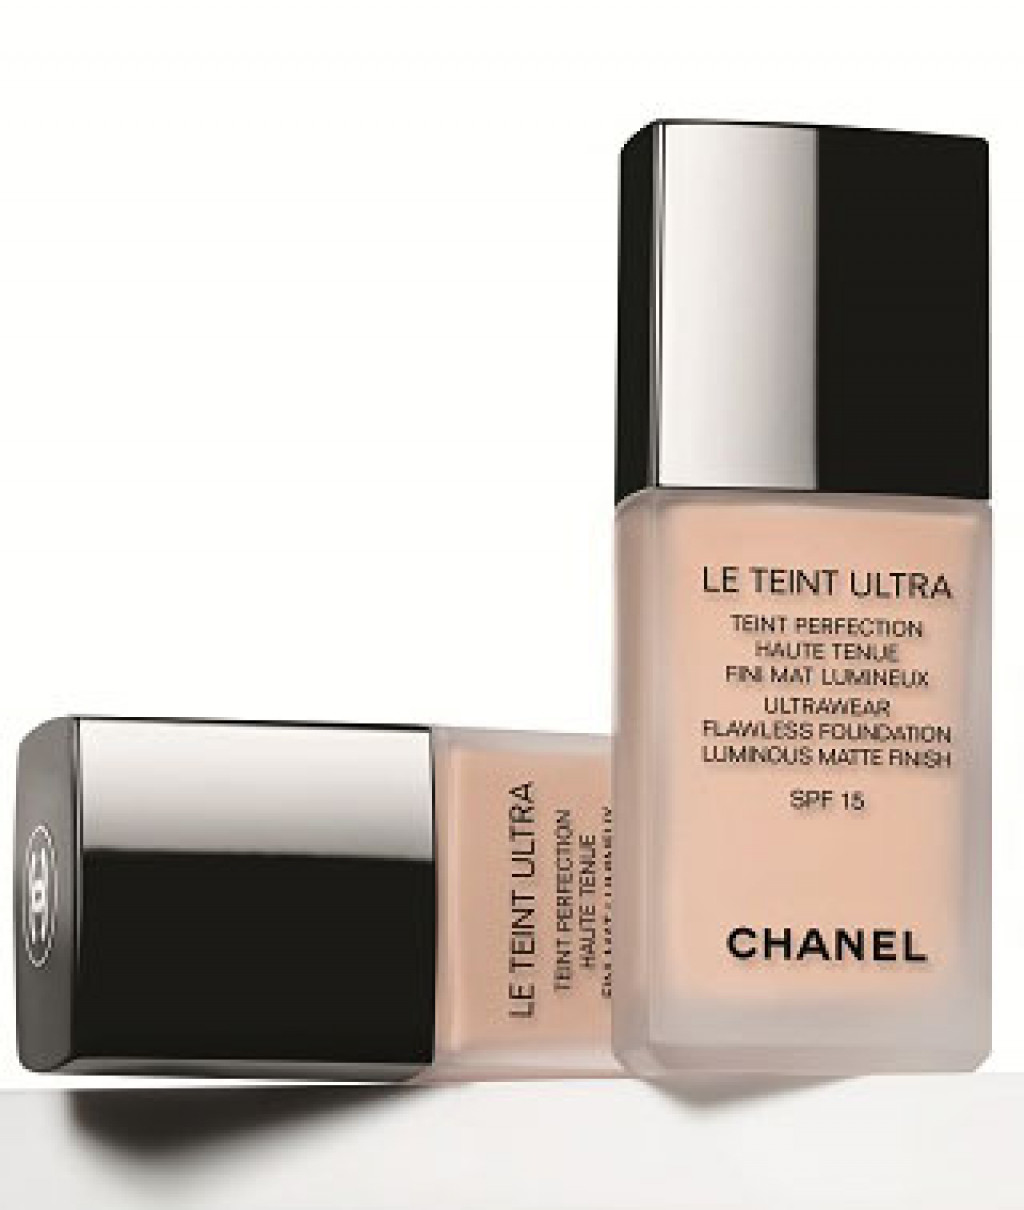 Chanel Le Teint Ultra Ultrawear Flawless Foundation Luminous Matte Finish  SPF 15, Makeup